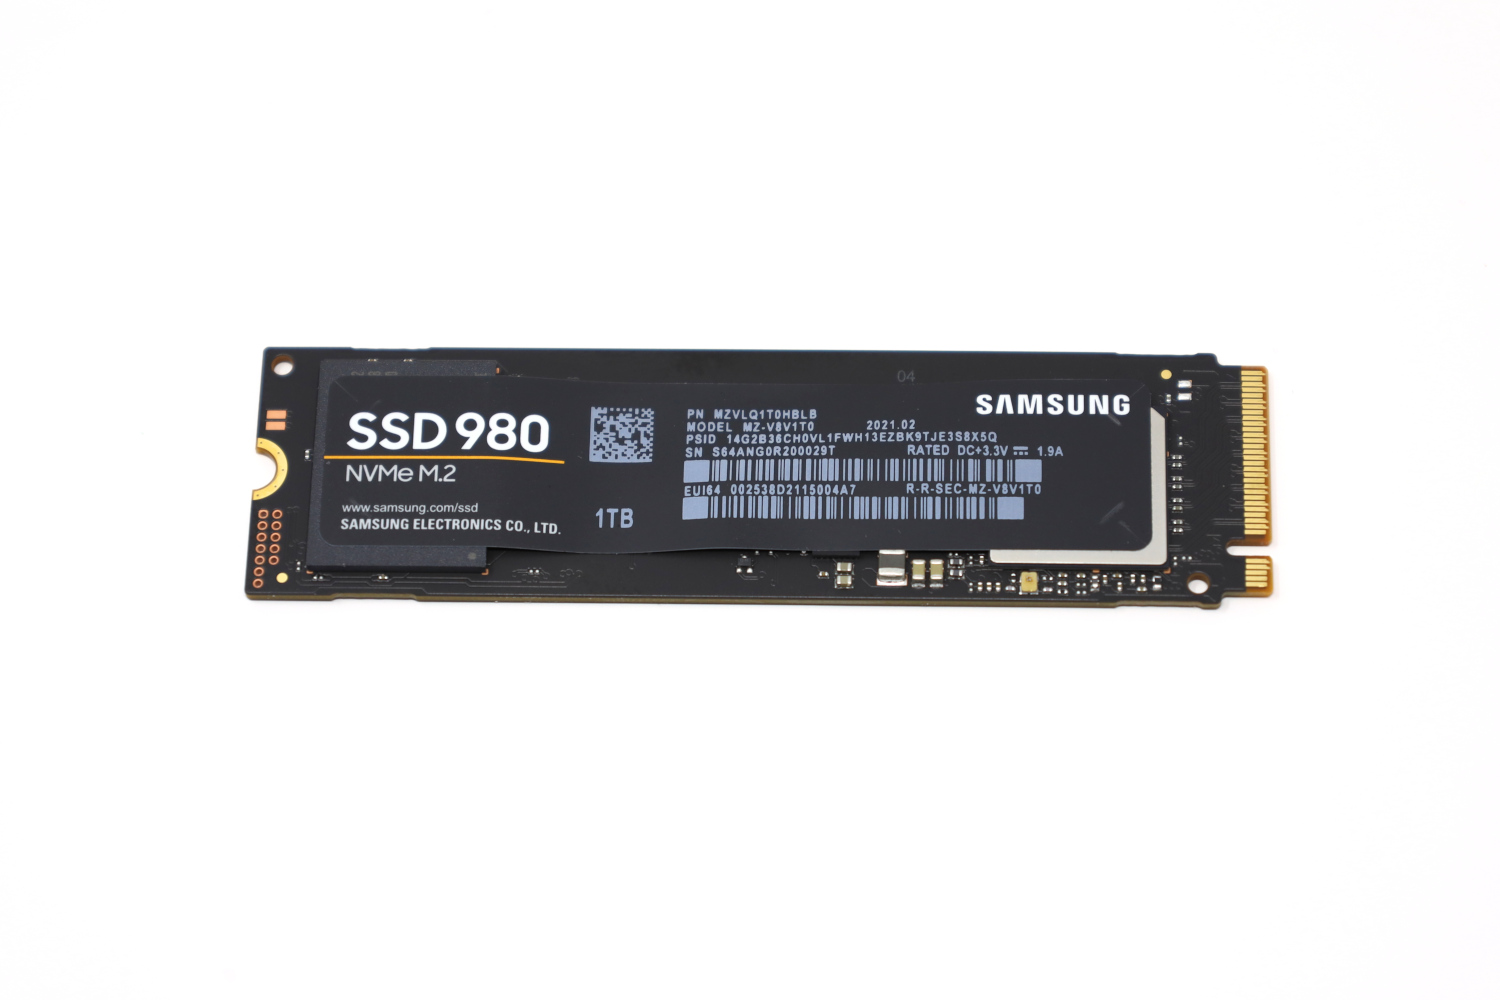 Samsung 980 1TB DRAM-less NVMe SSD Review - ServeTheHome